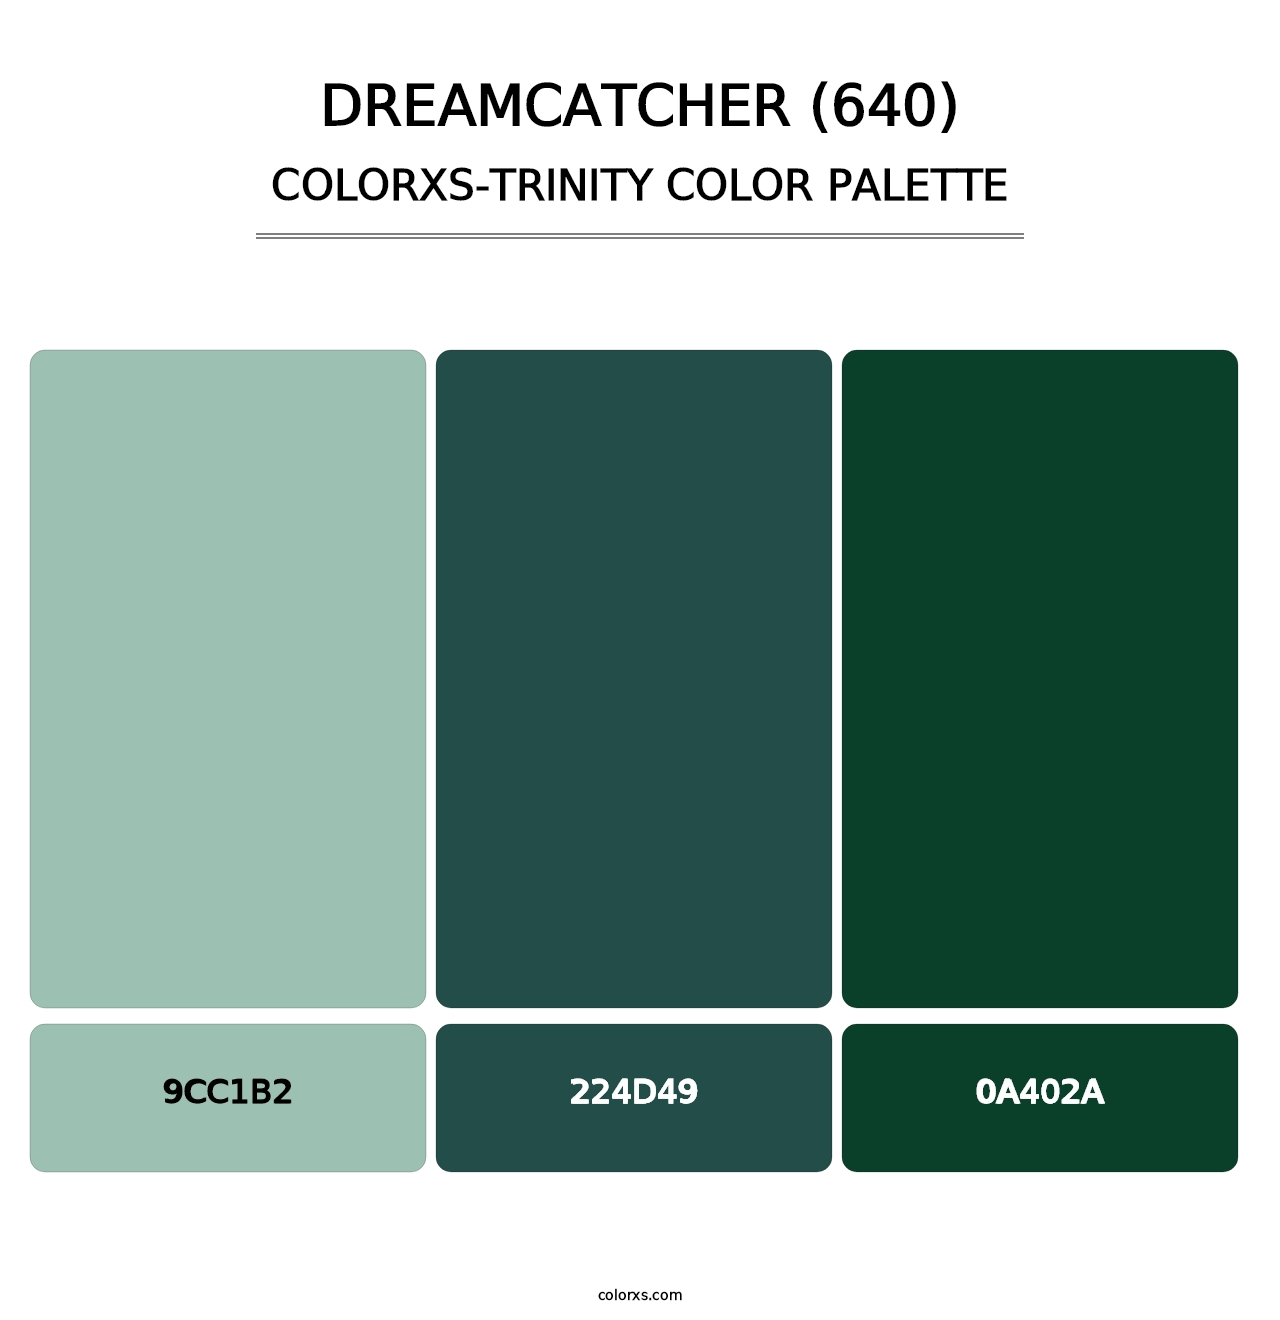 Dreamcatcher (640) - Colorxs Trinity Palette